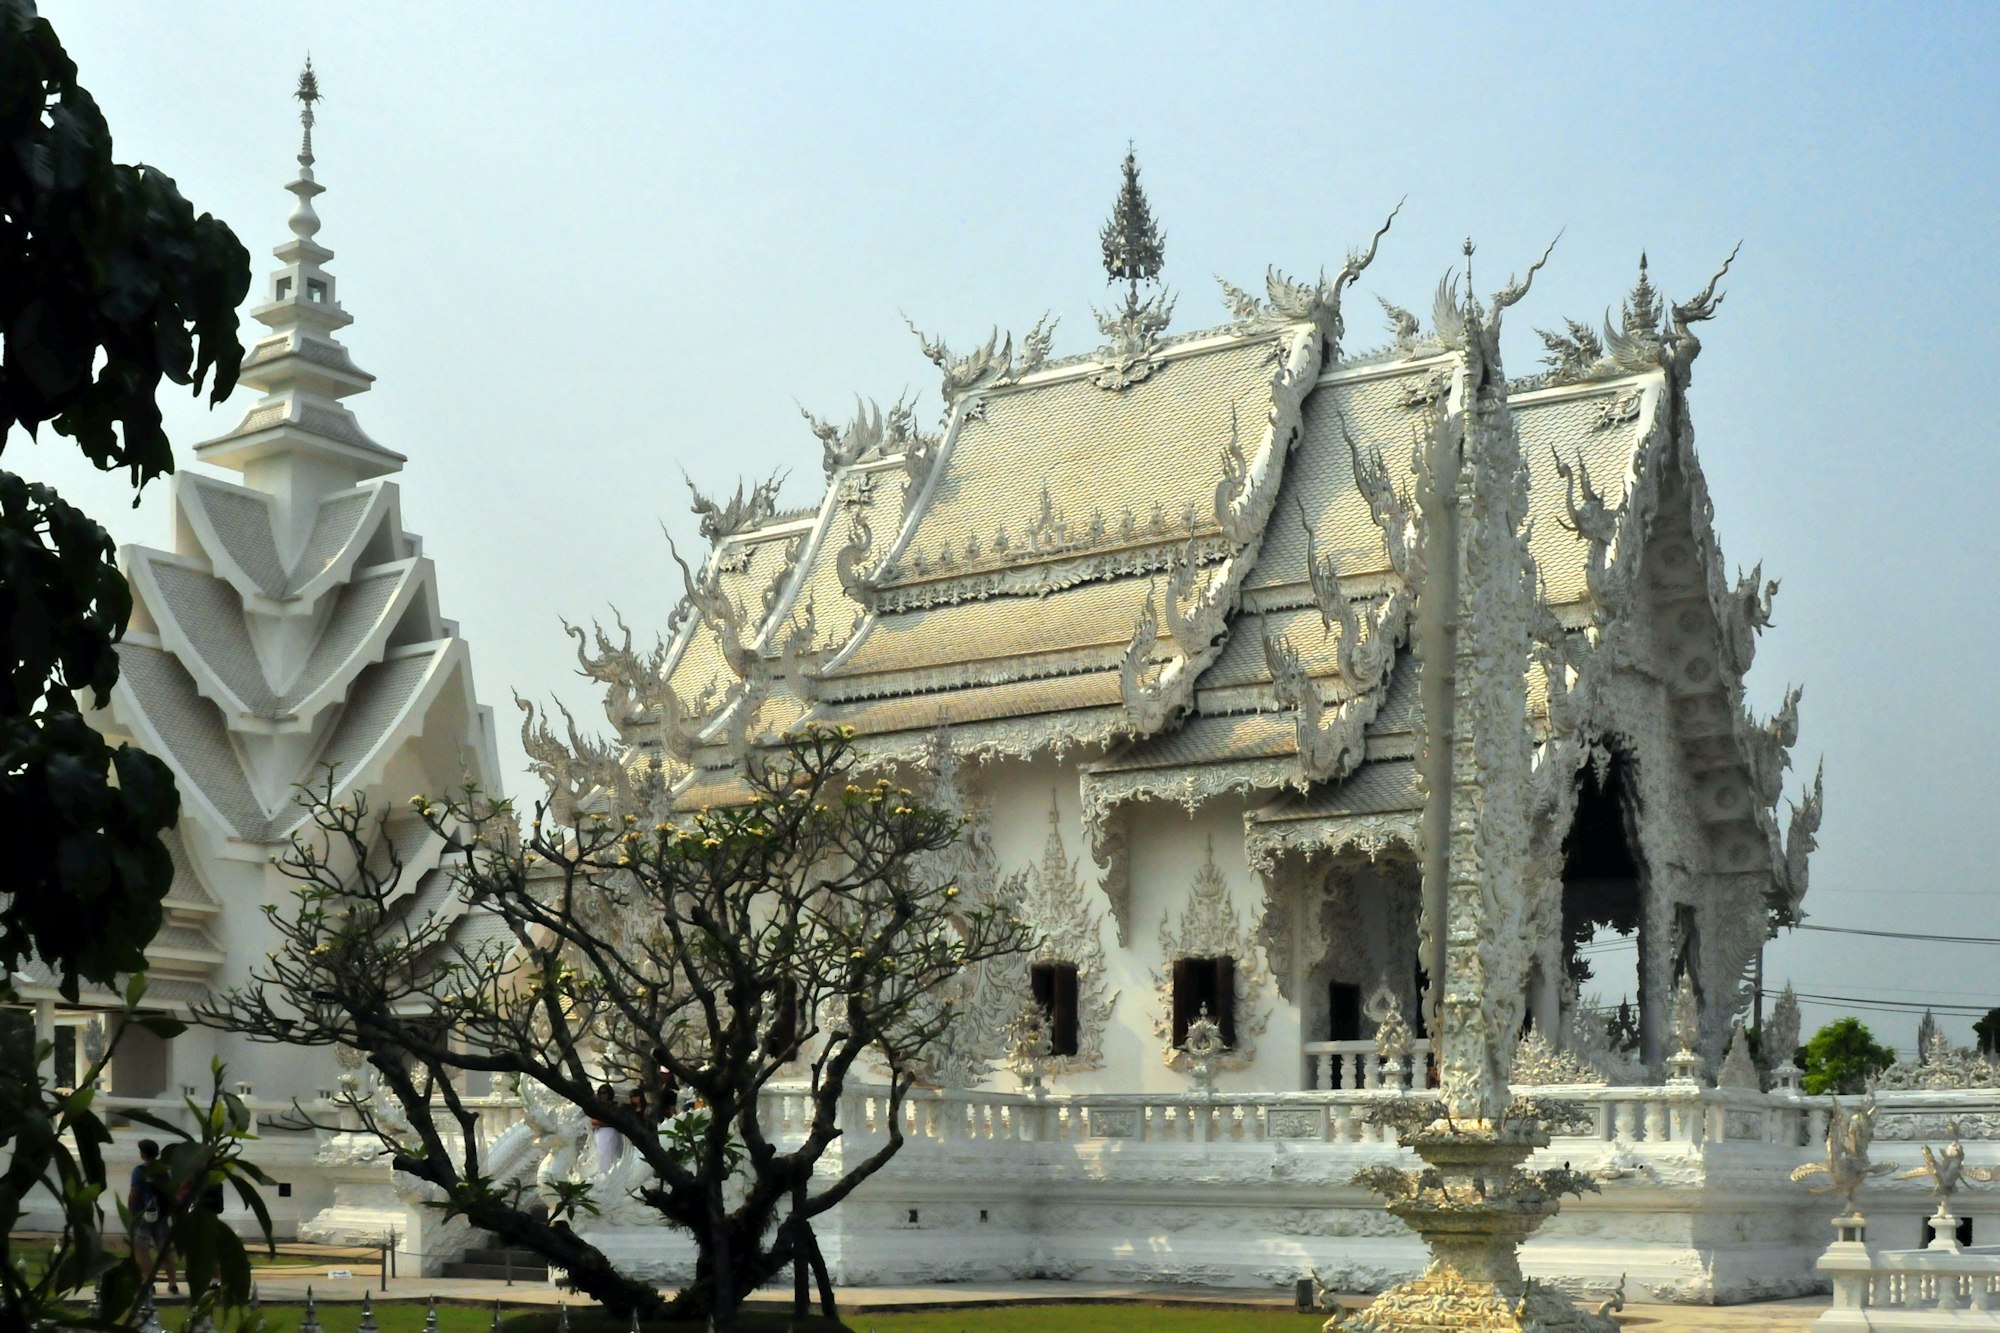 The Stunning White Temple (Wat Rong Khun) in Chiang Rai